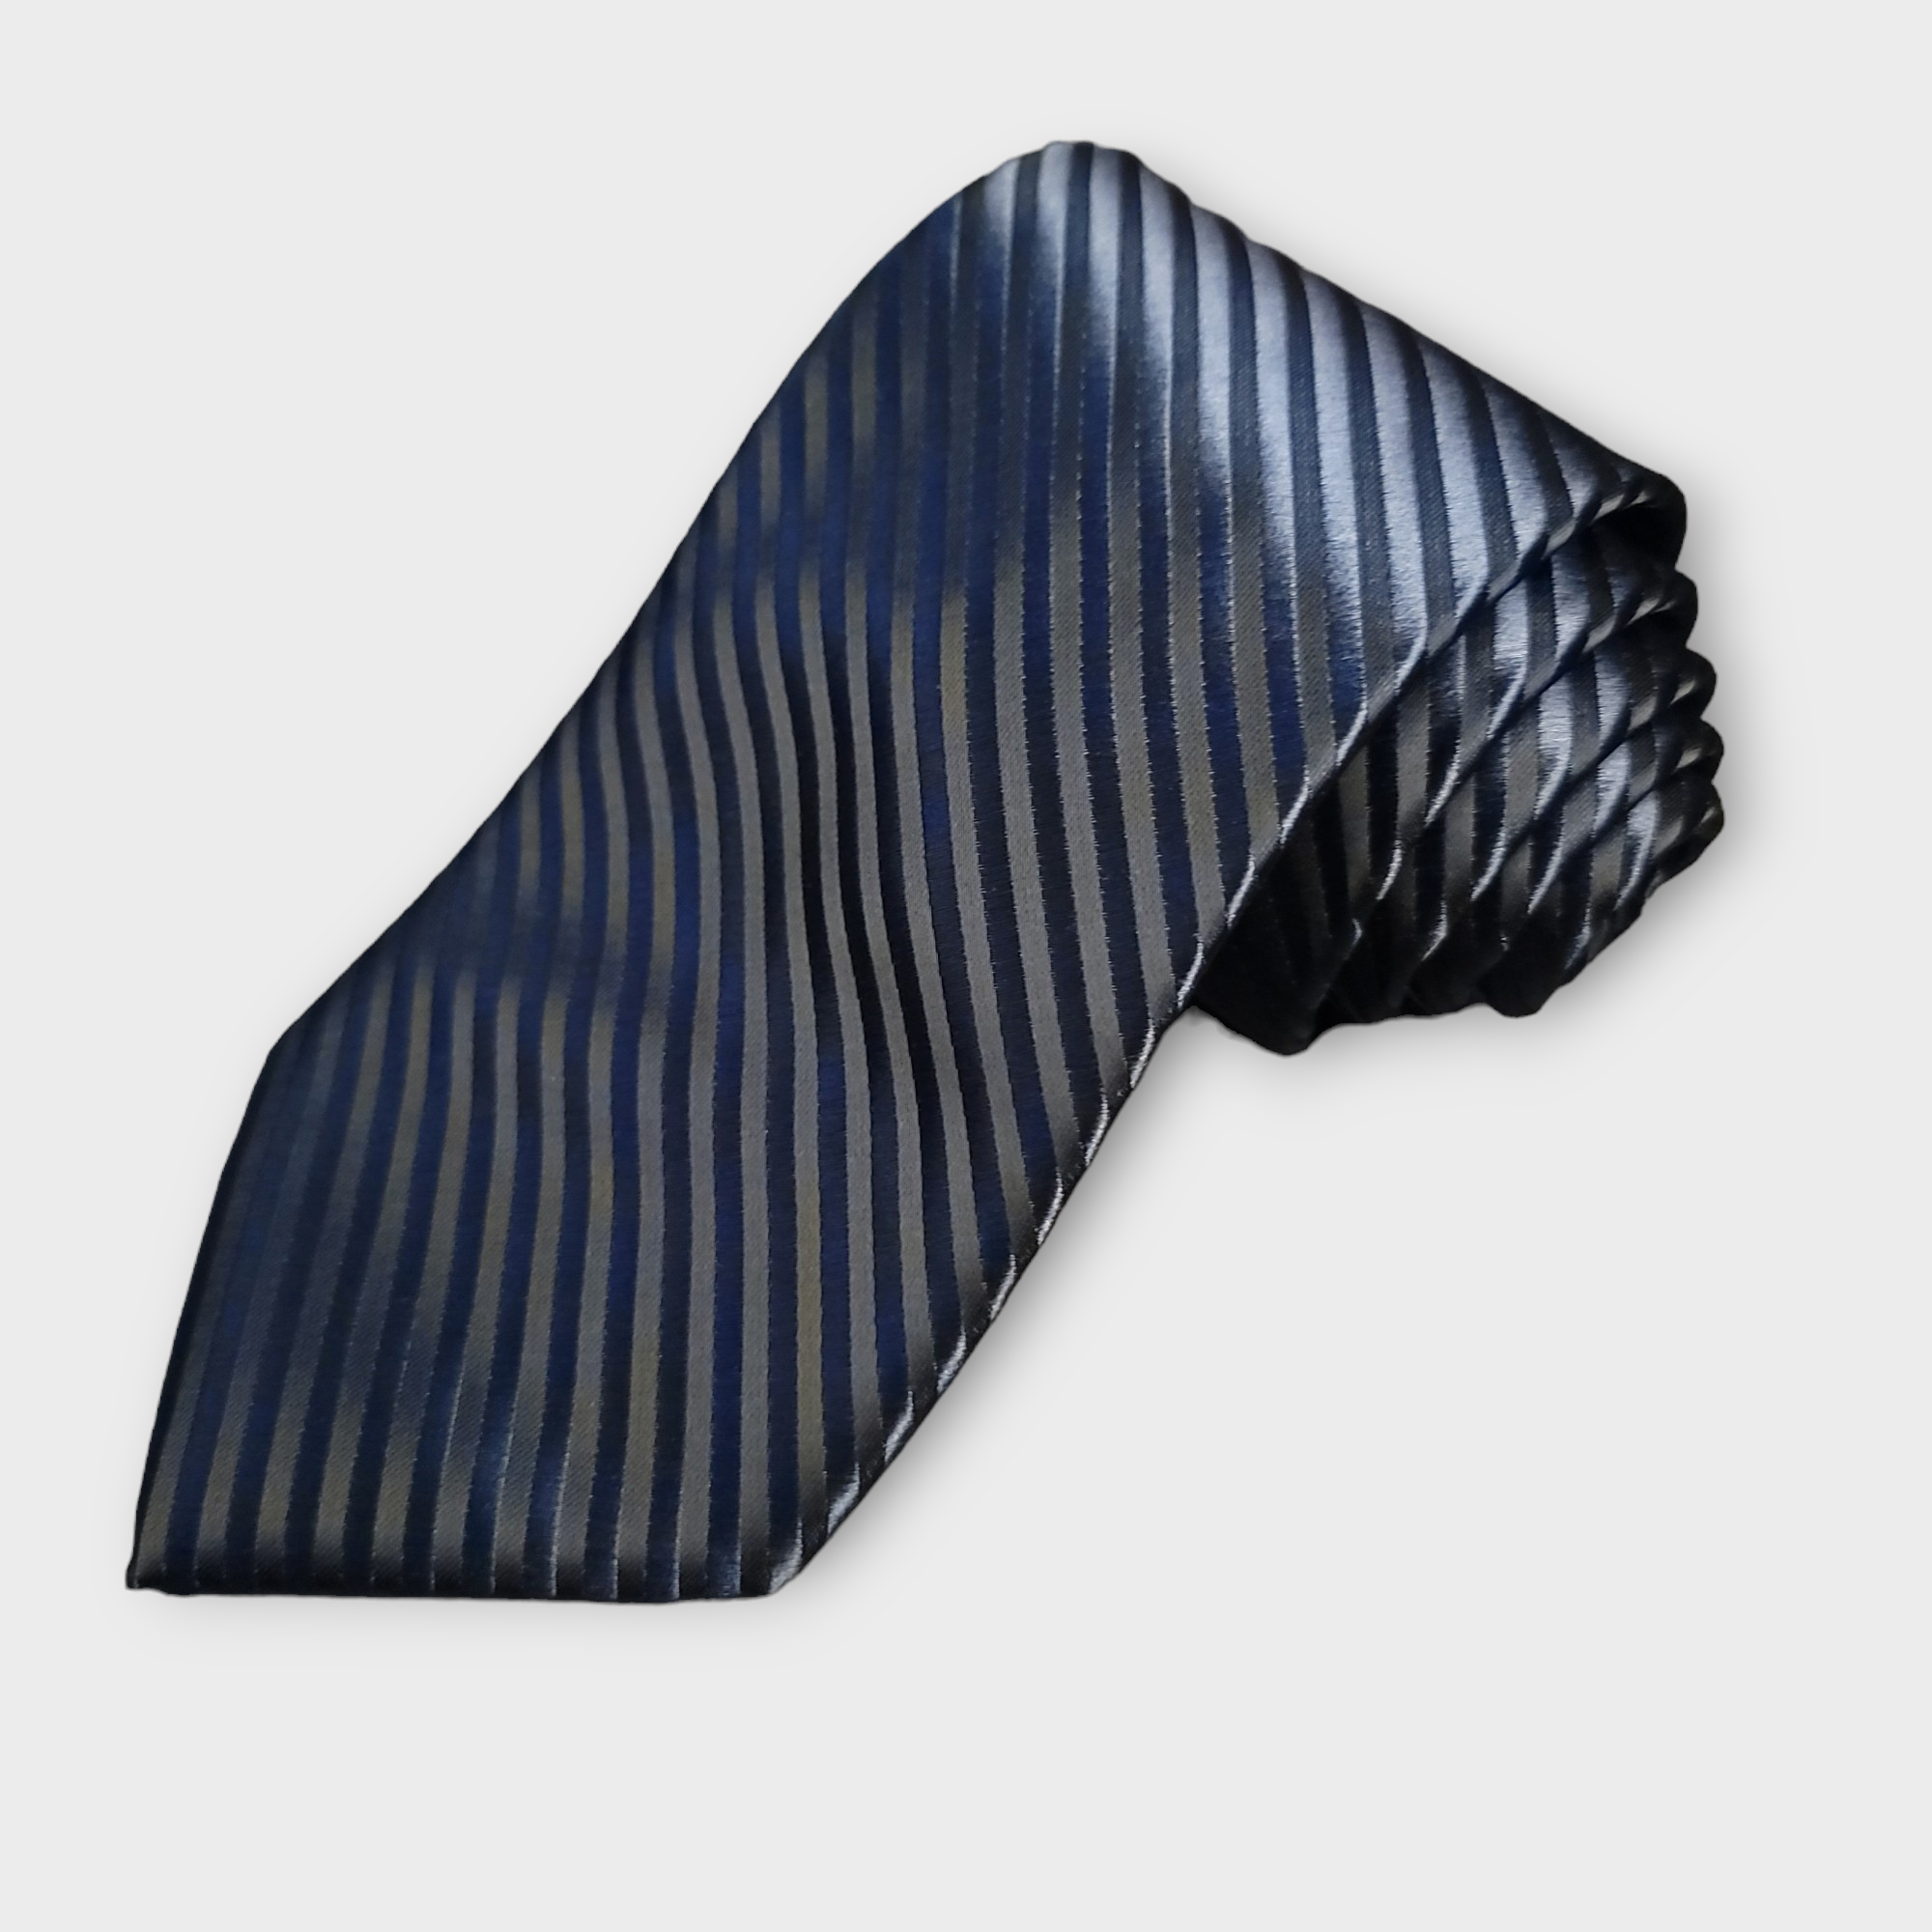 Navy Blue & Black Striped Silk Tie Pocket Square & Cufflinks Set